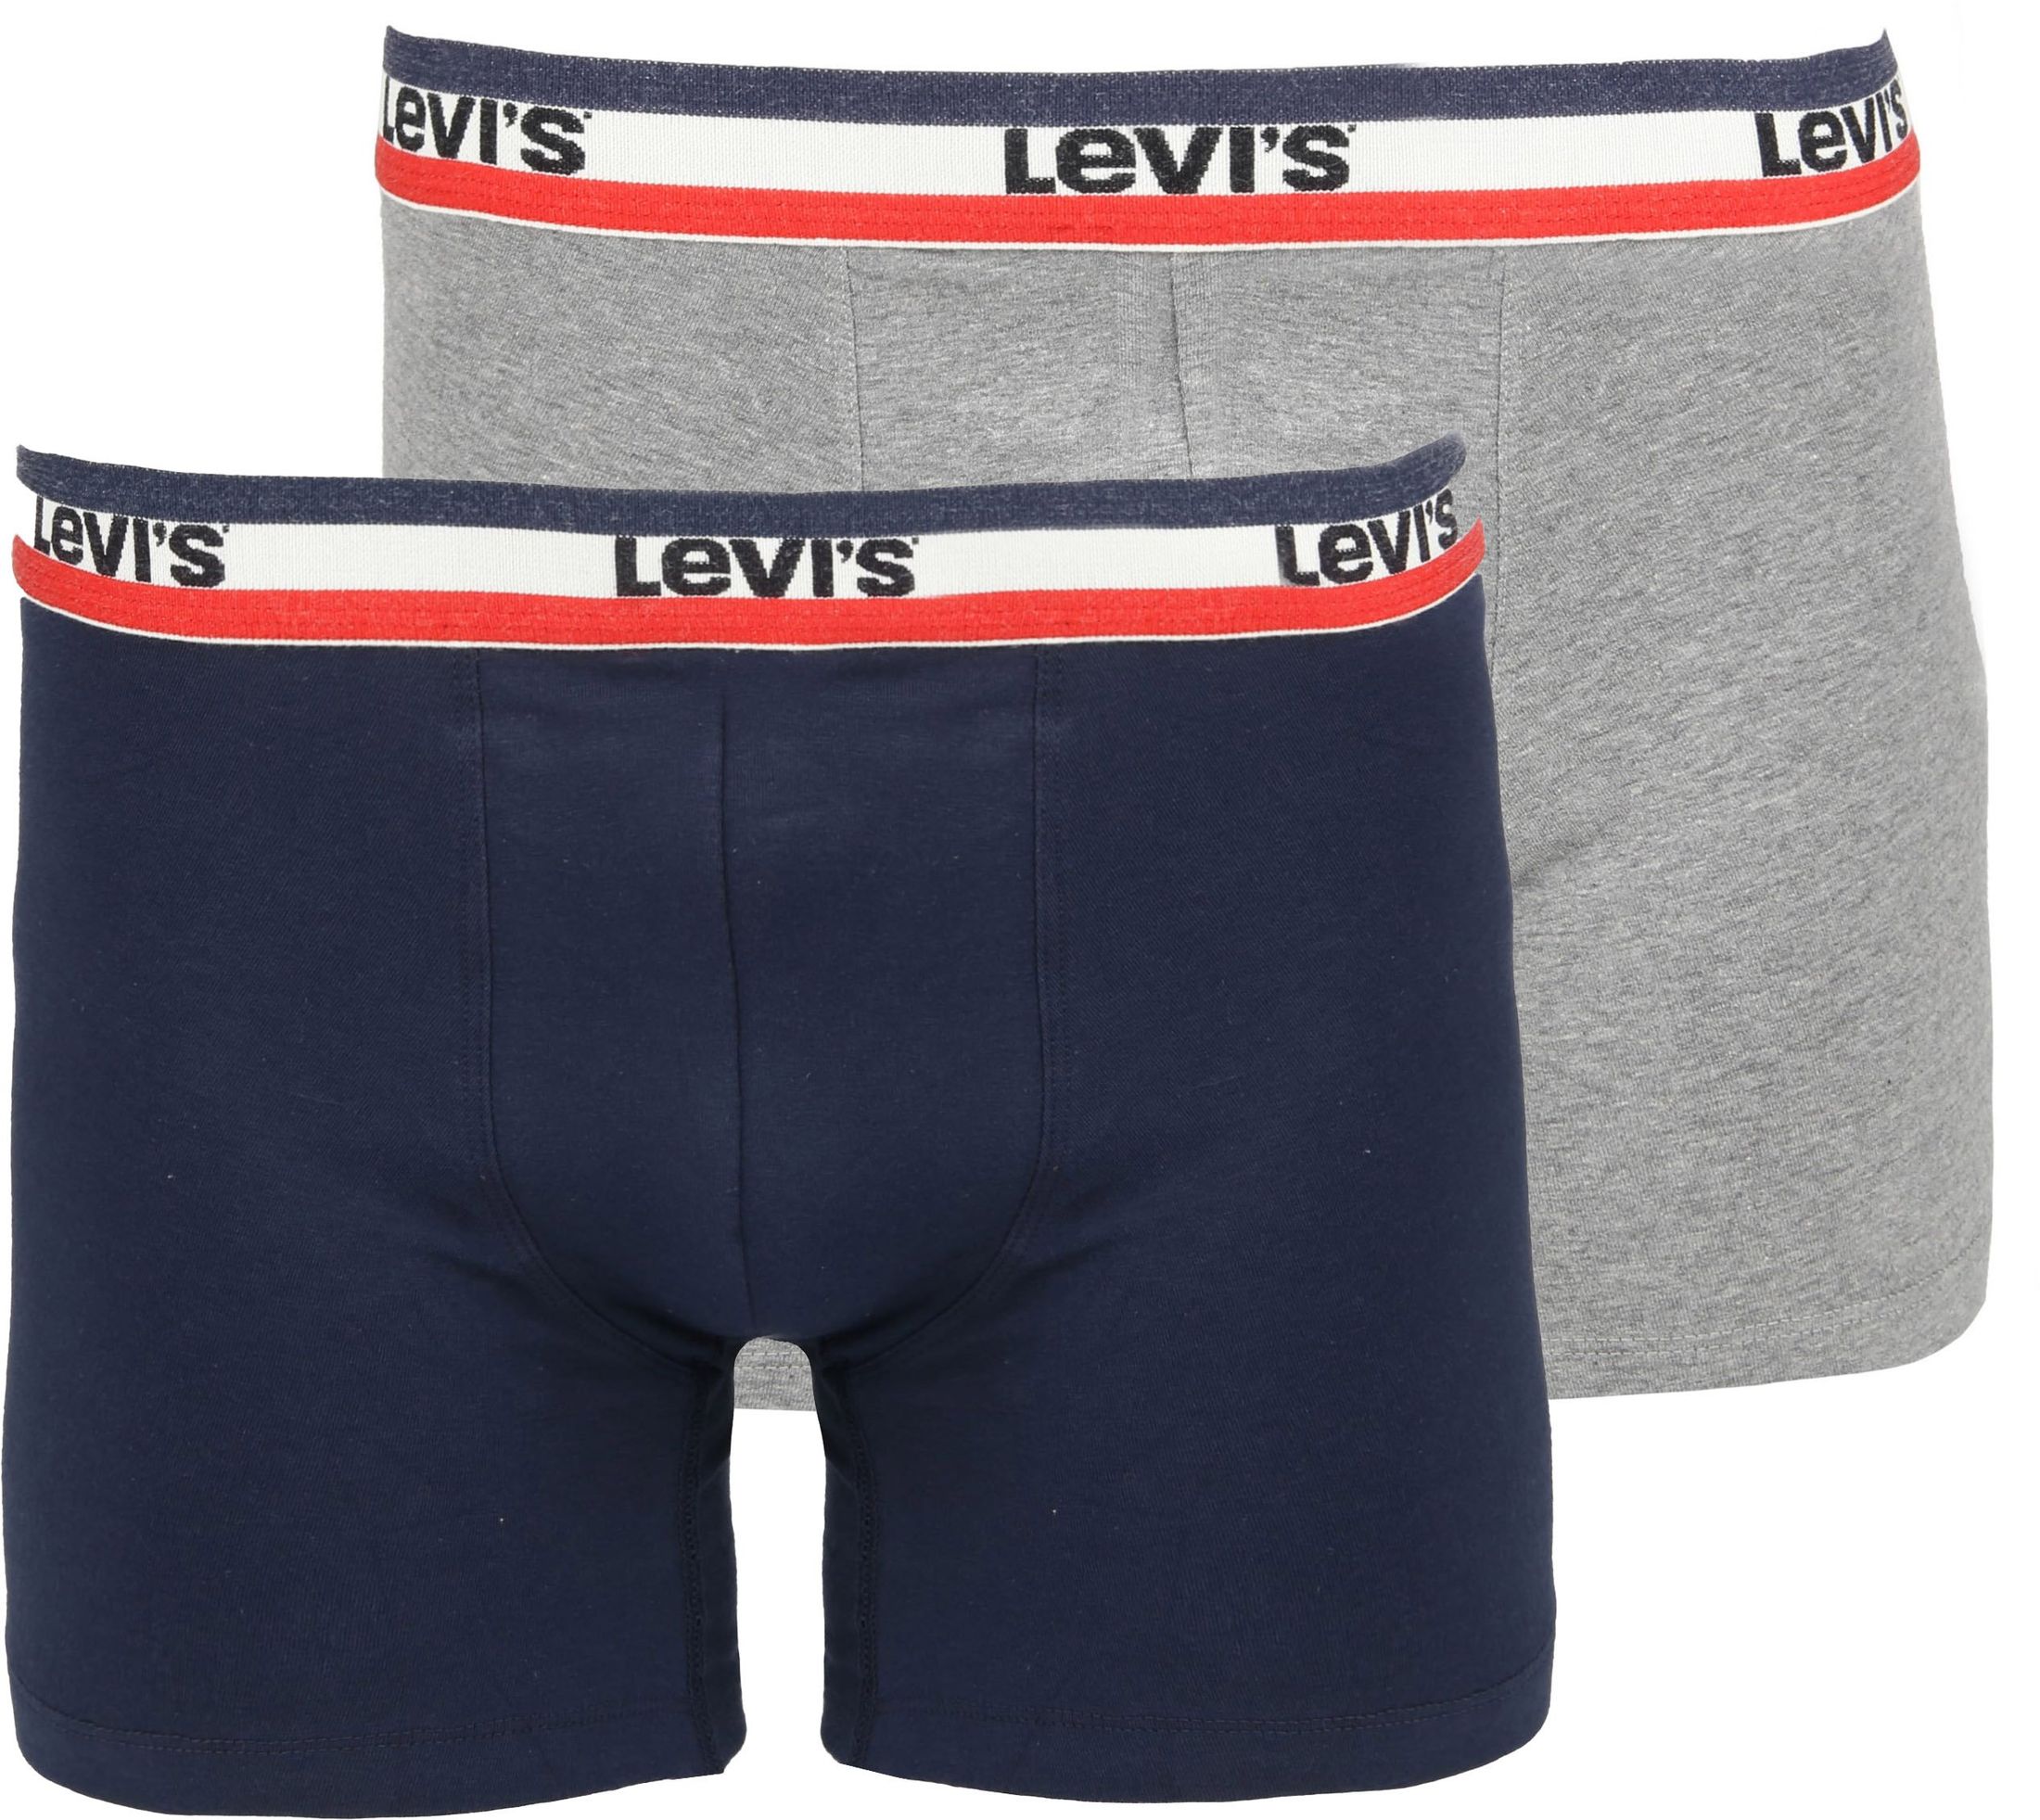 Levi's Boxer Shorts 2-Pack Dark Blue Grey Blue size M